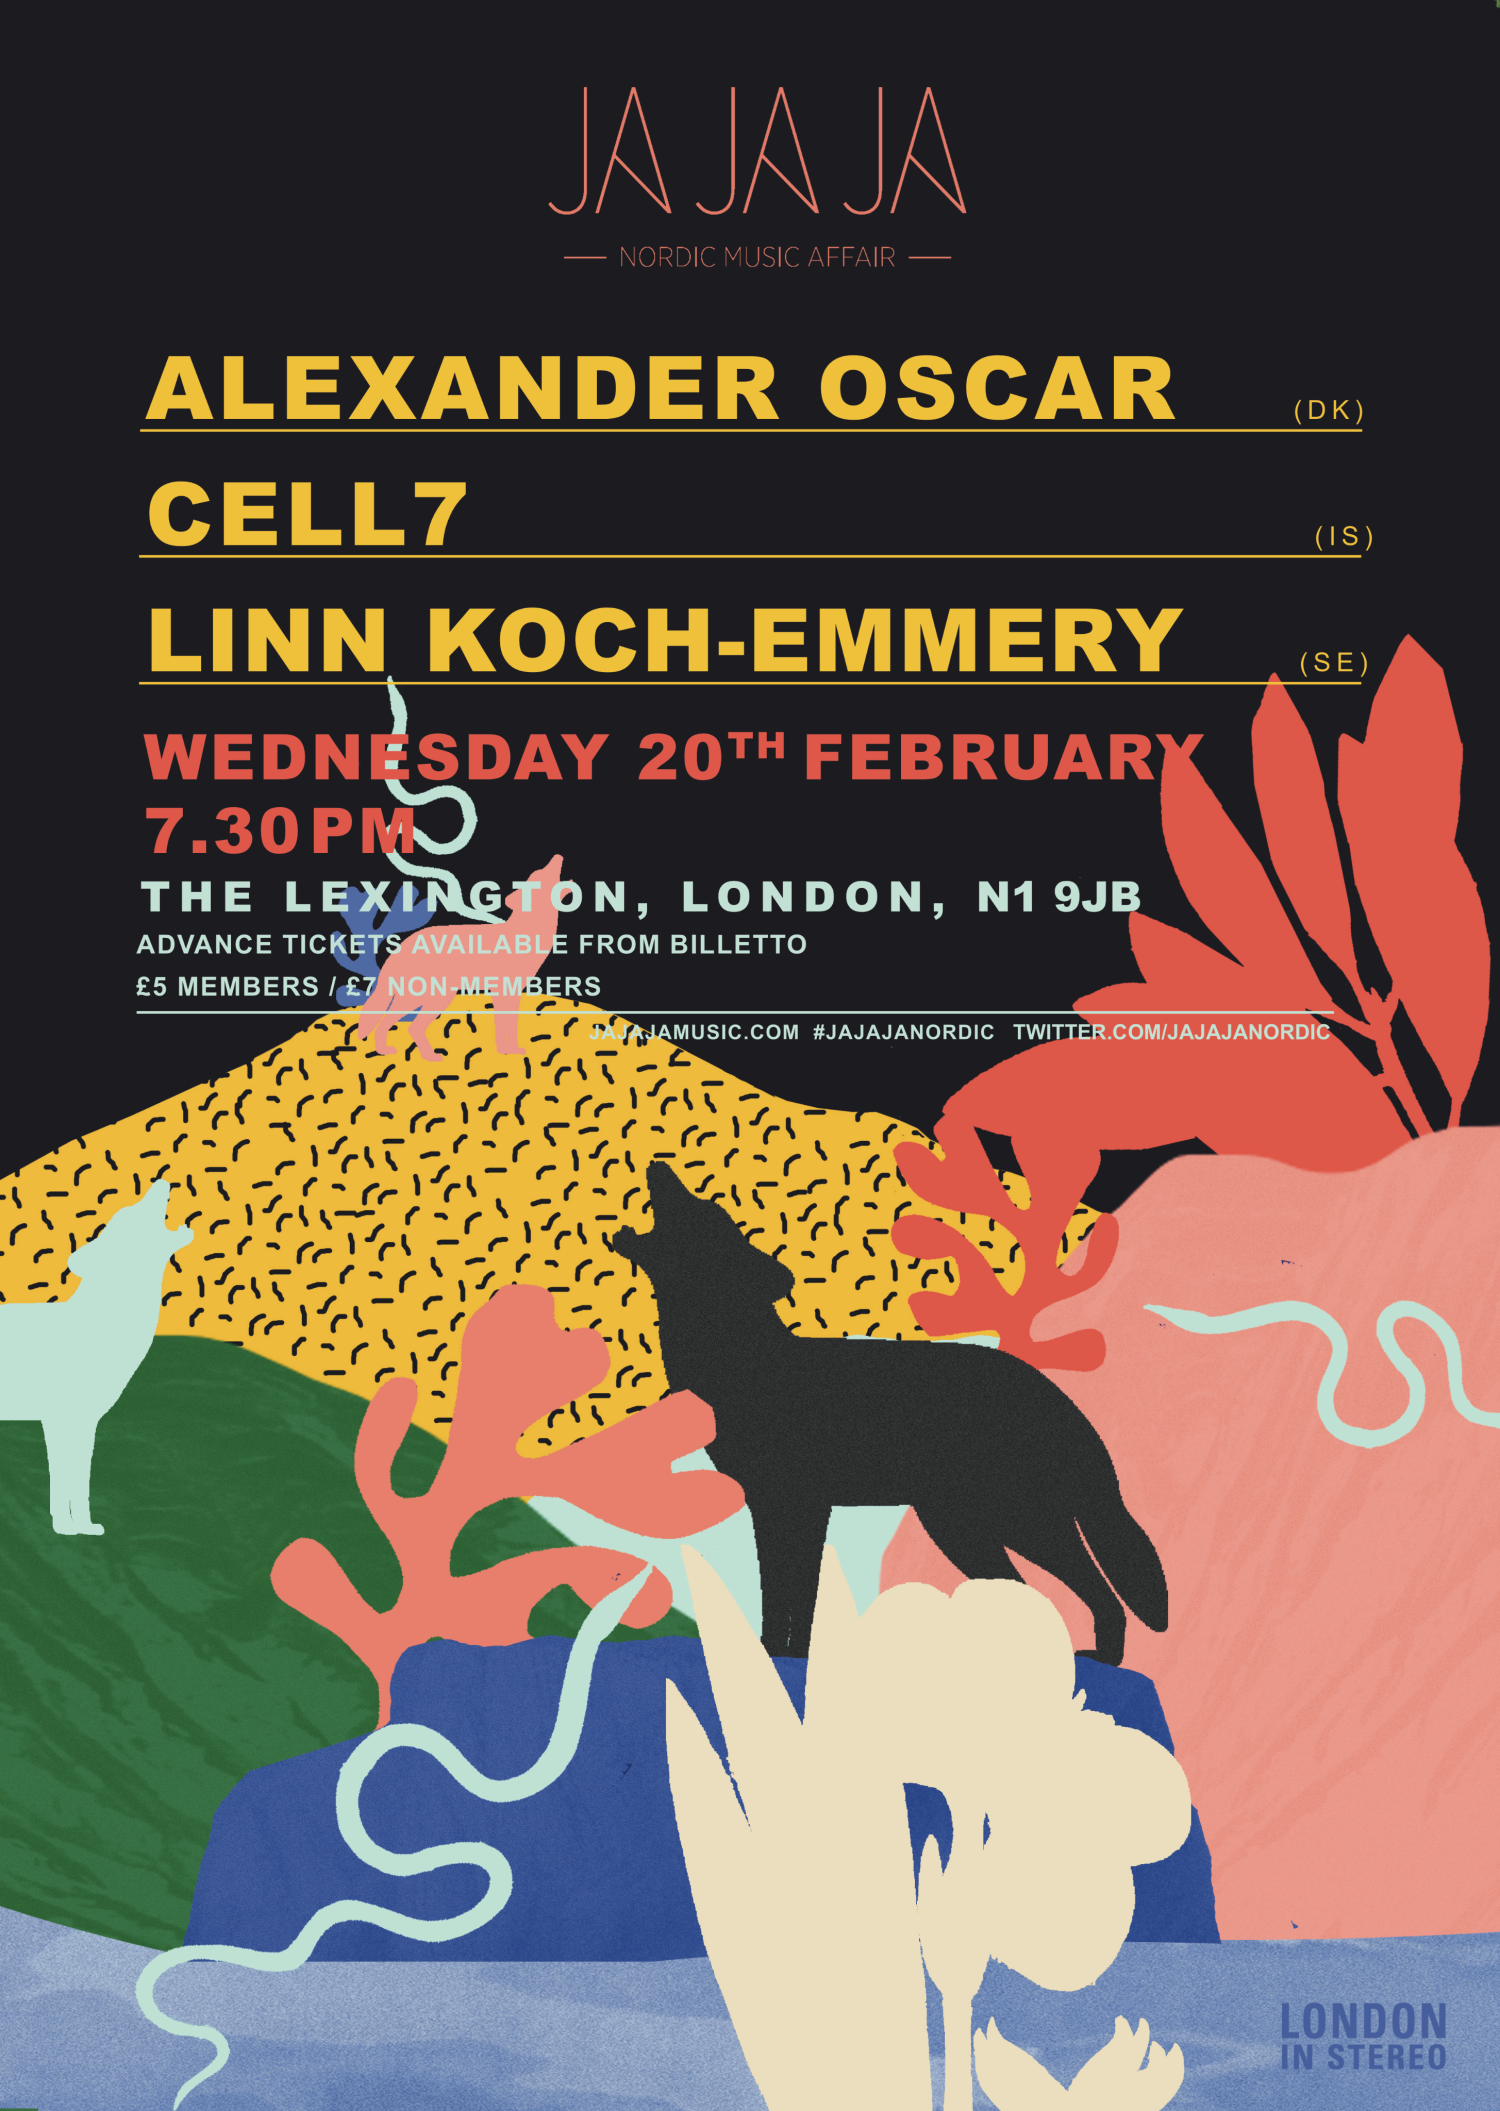 Ja Ja Ja London: February 2019 with Alexander Oscar, Cell7 + Linn Koch-Emmery